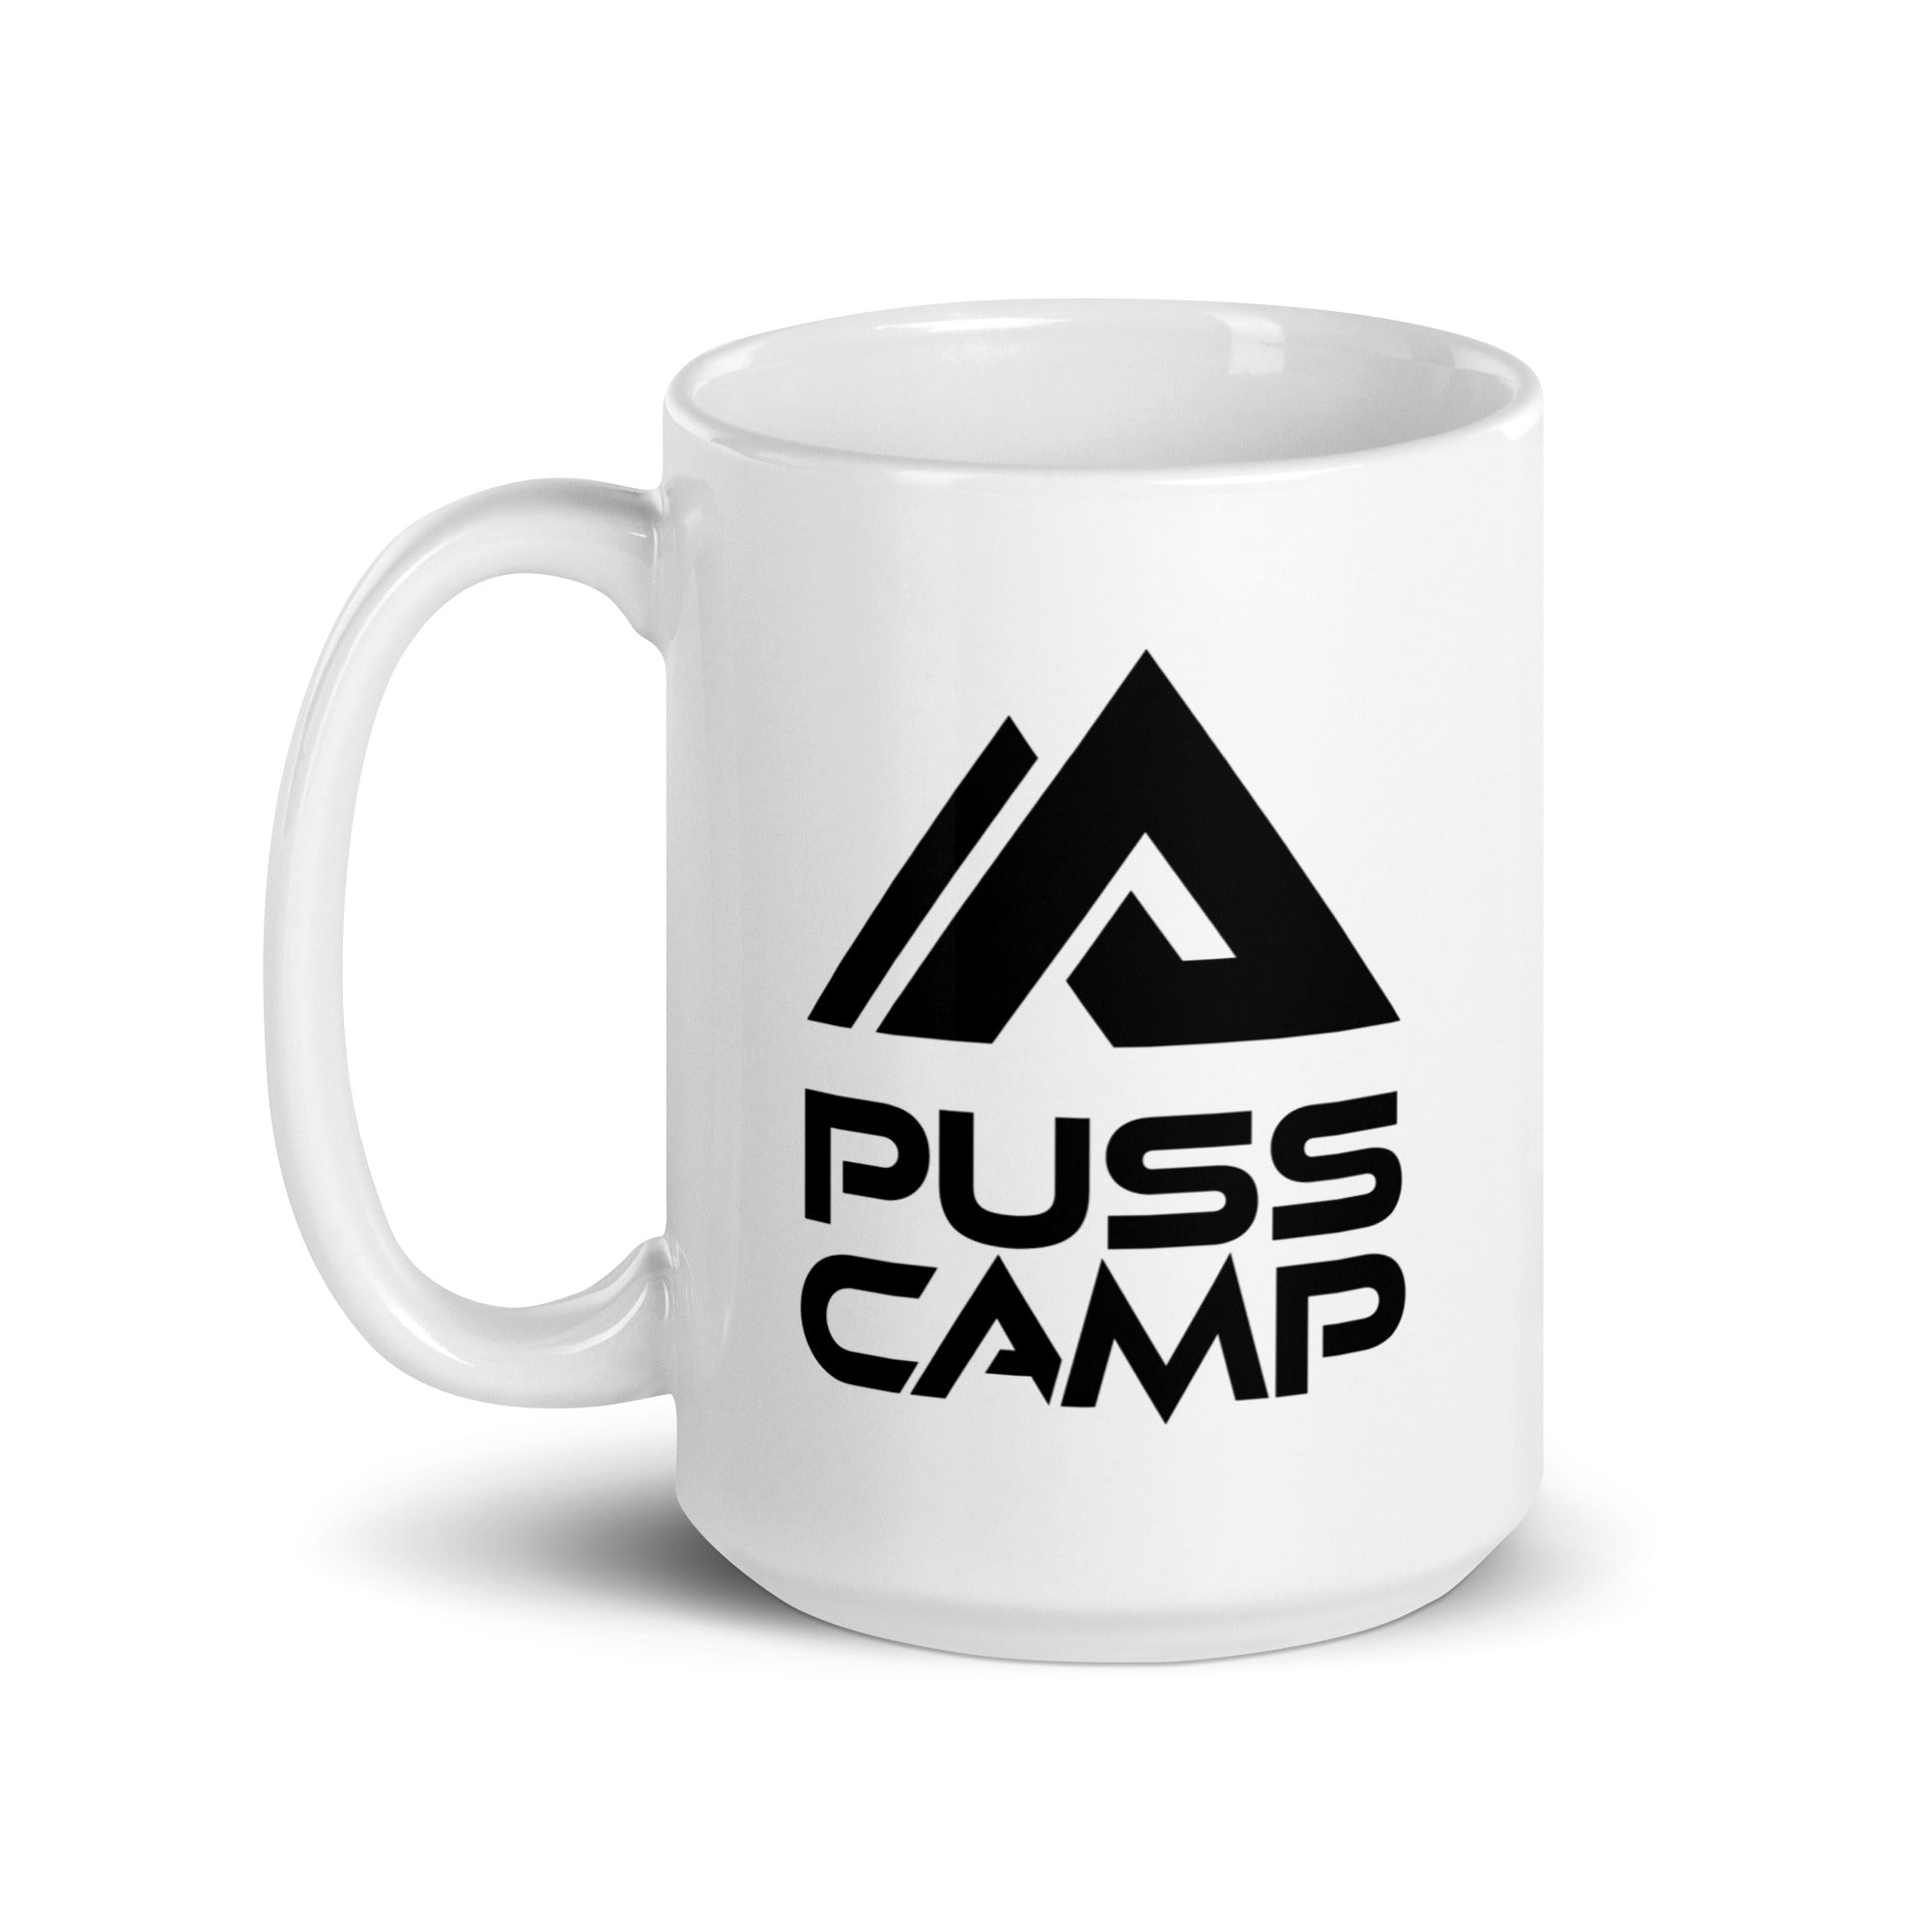 Puss Camp valkoinen muki